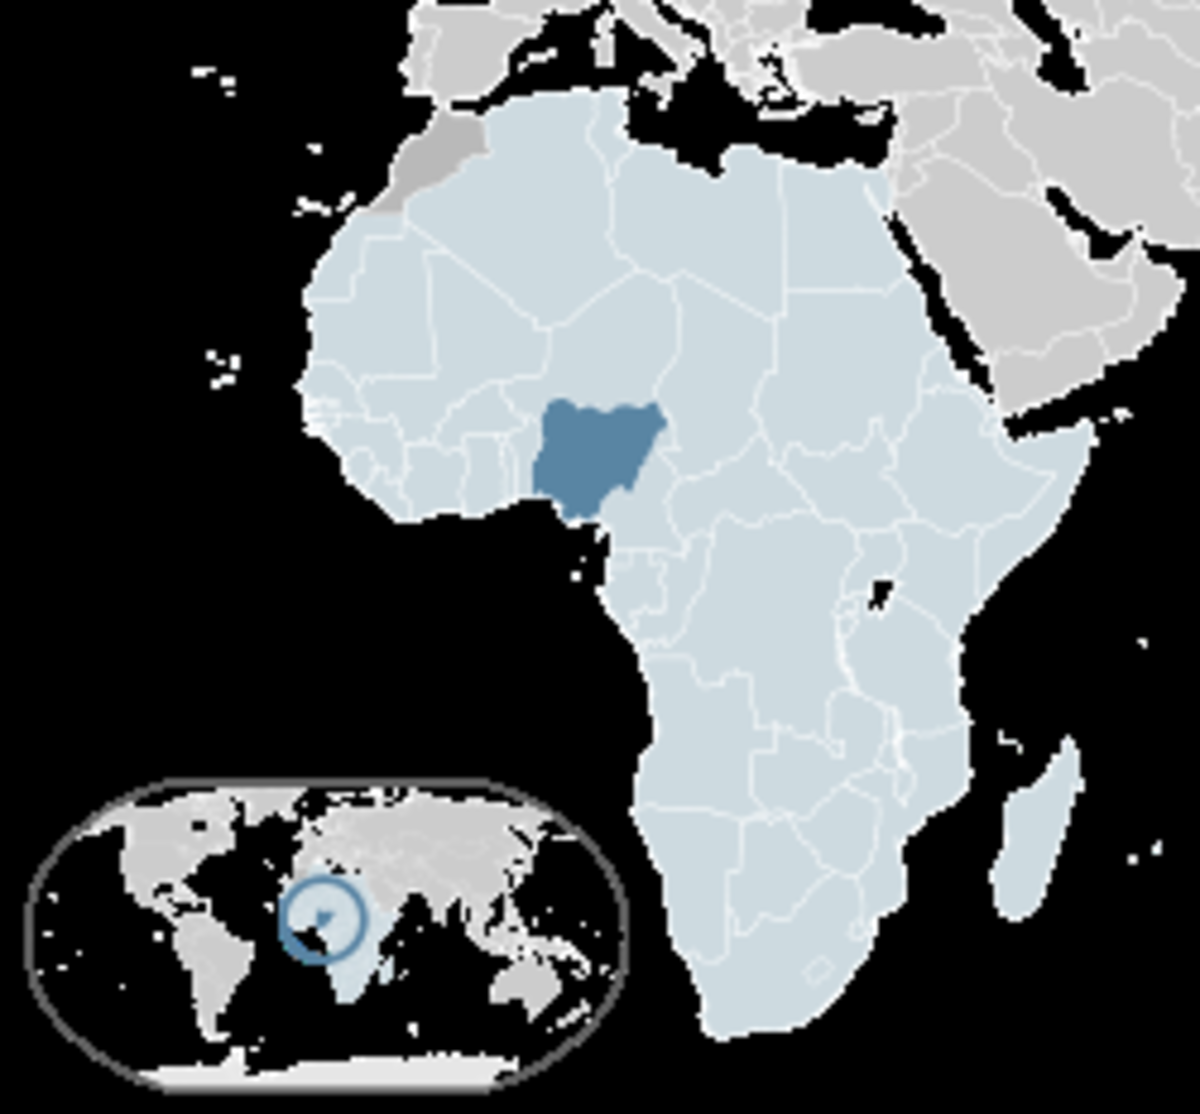 Map showing Nigeria